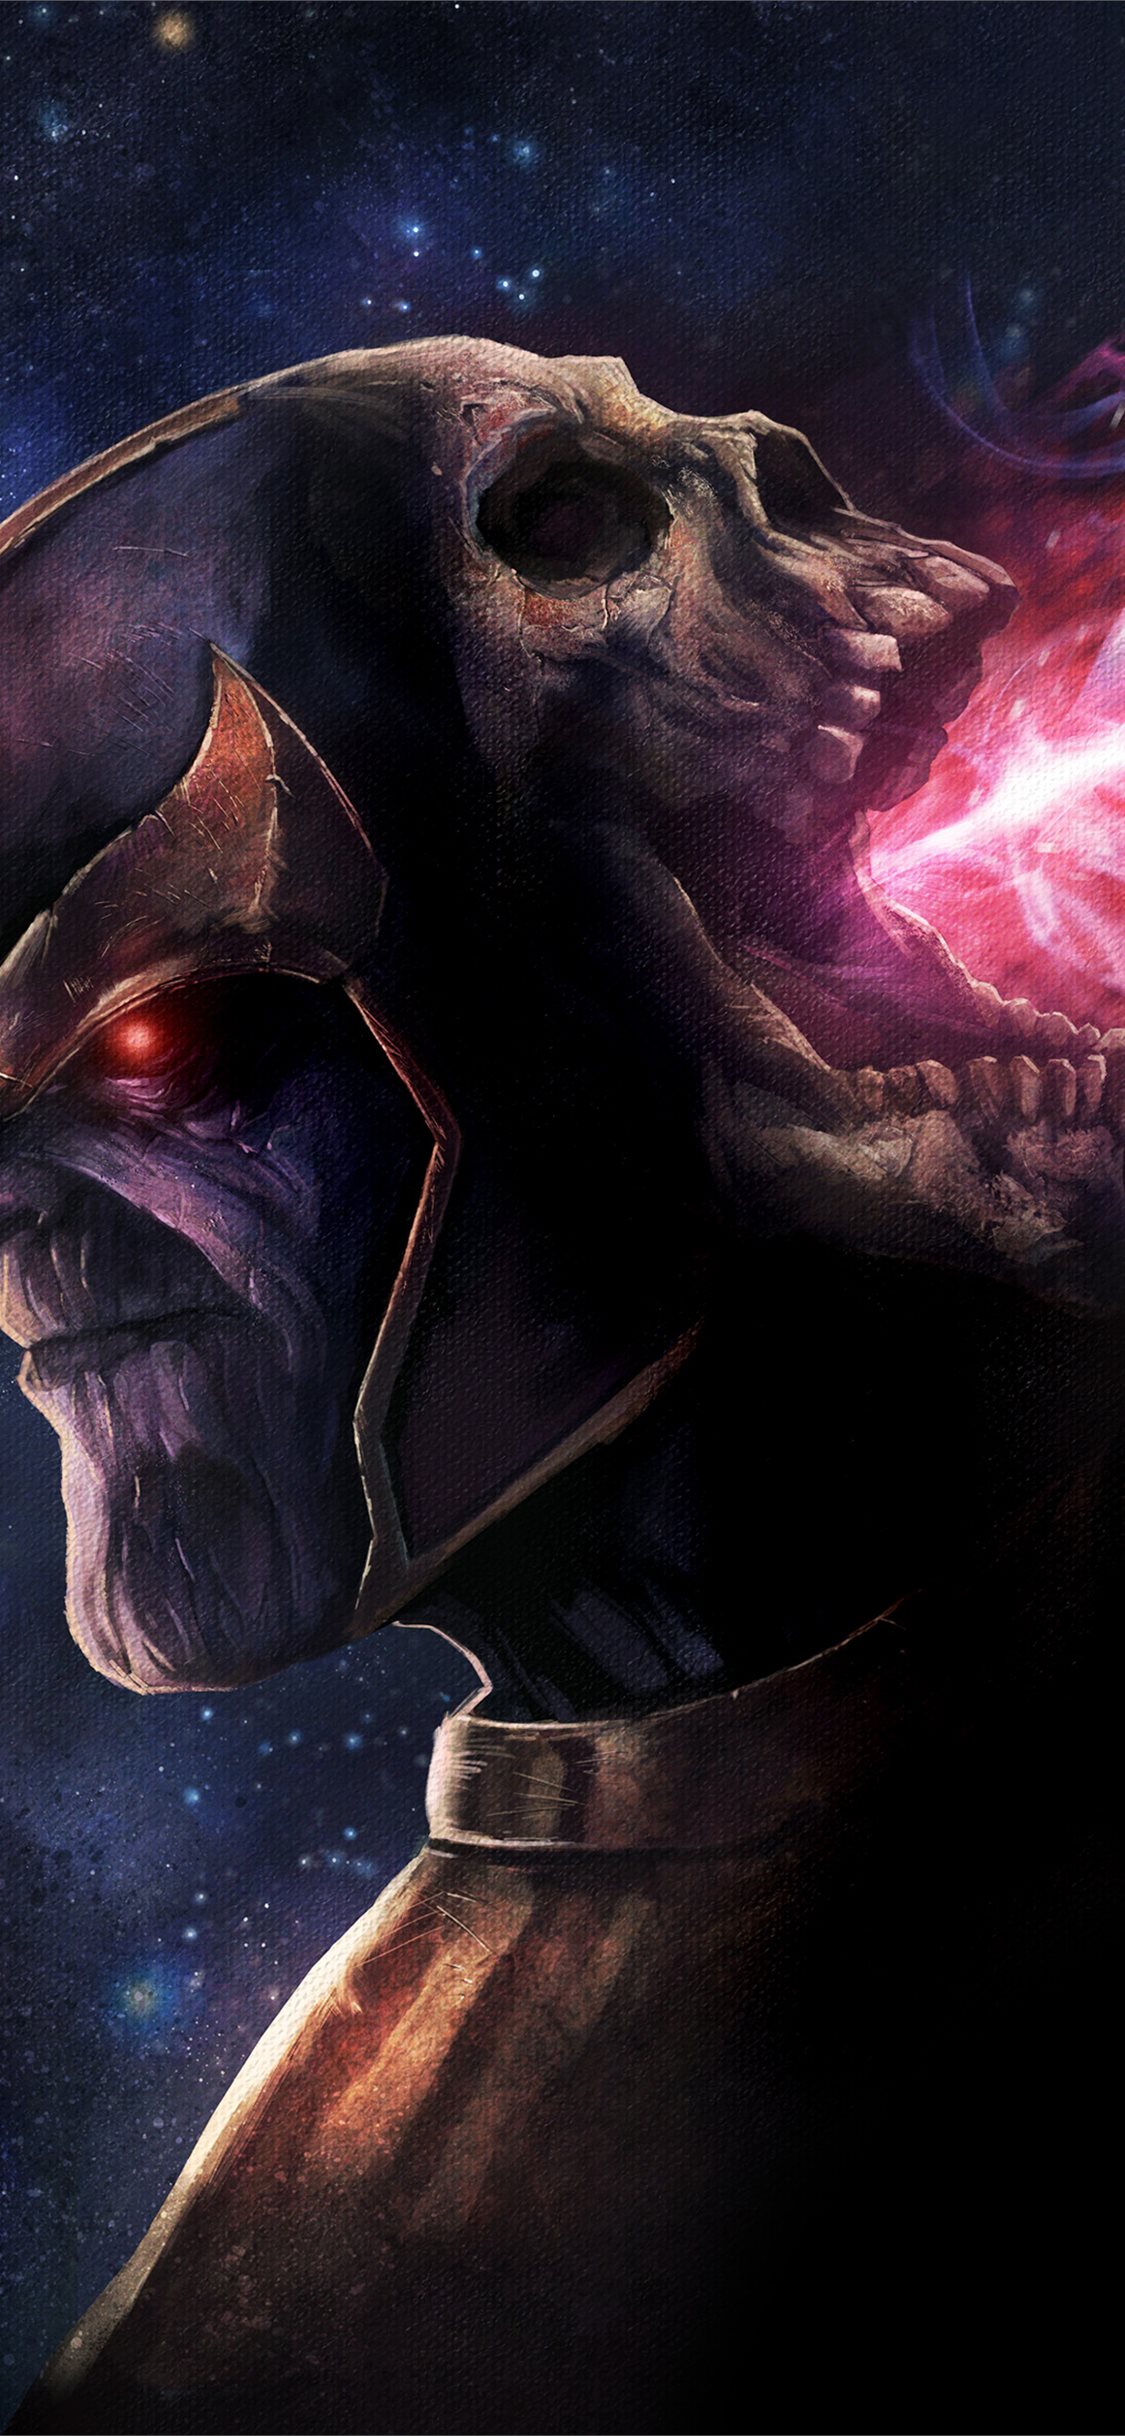 Darkseid vs Thanos ic Vine iPhone Wallpapers Free Download